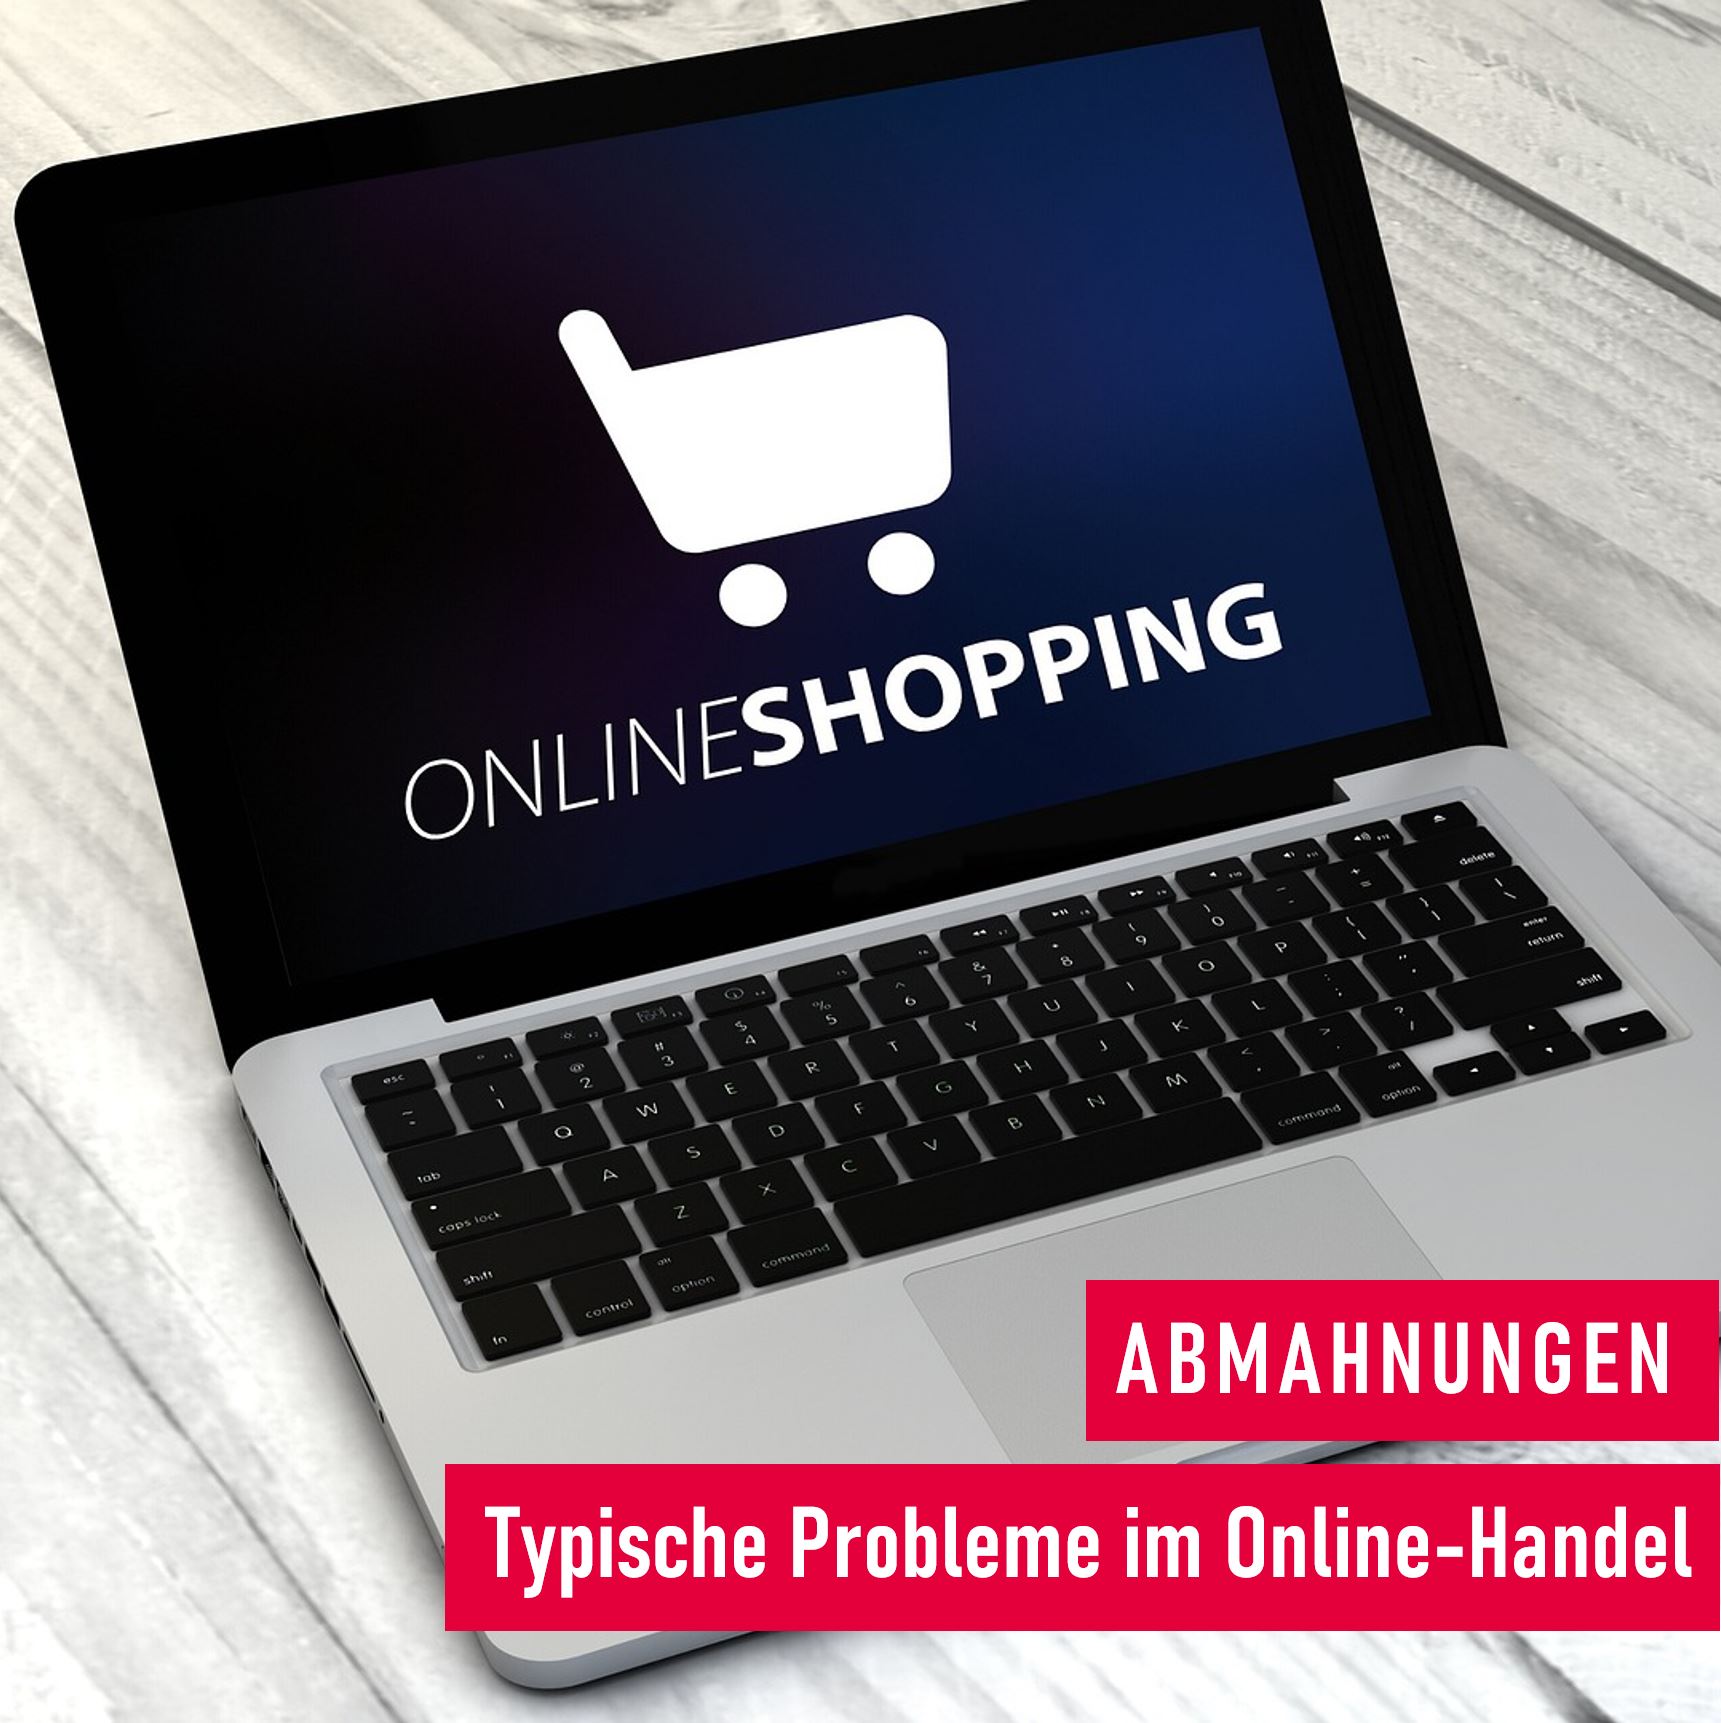 Abmahnung_Online-Handel_Webshop